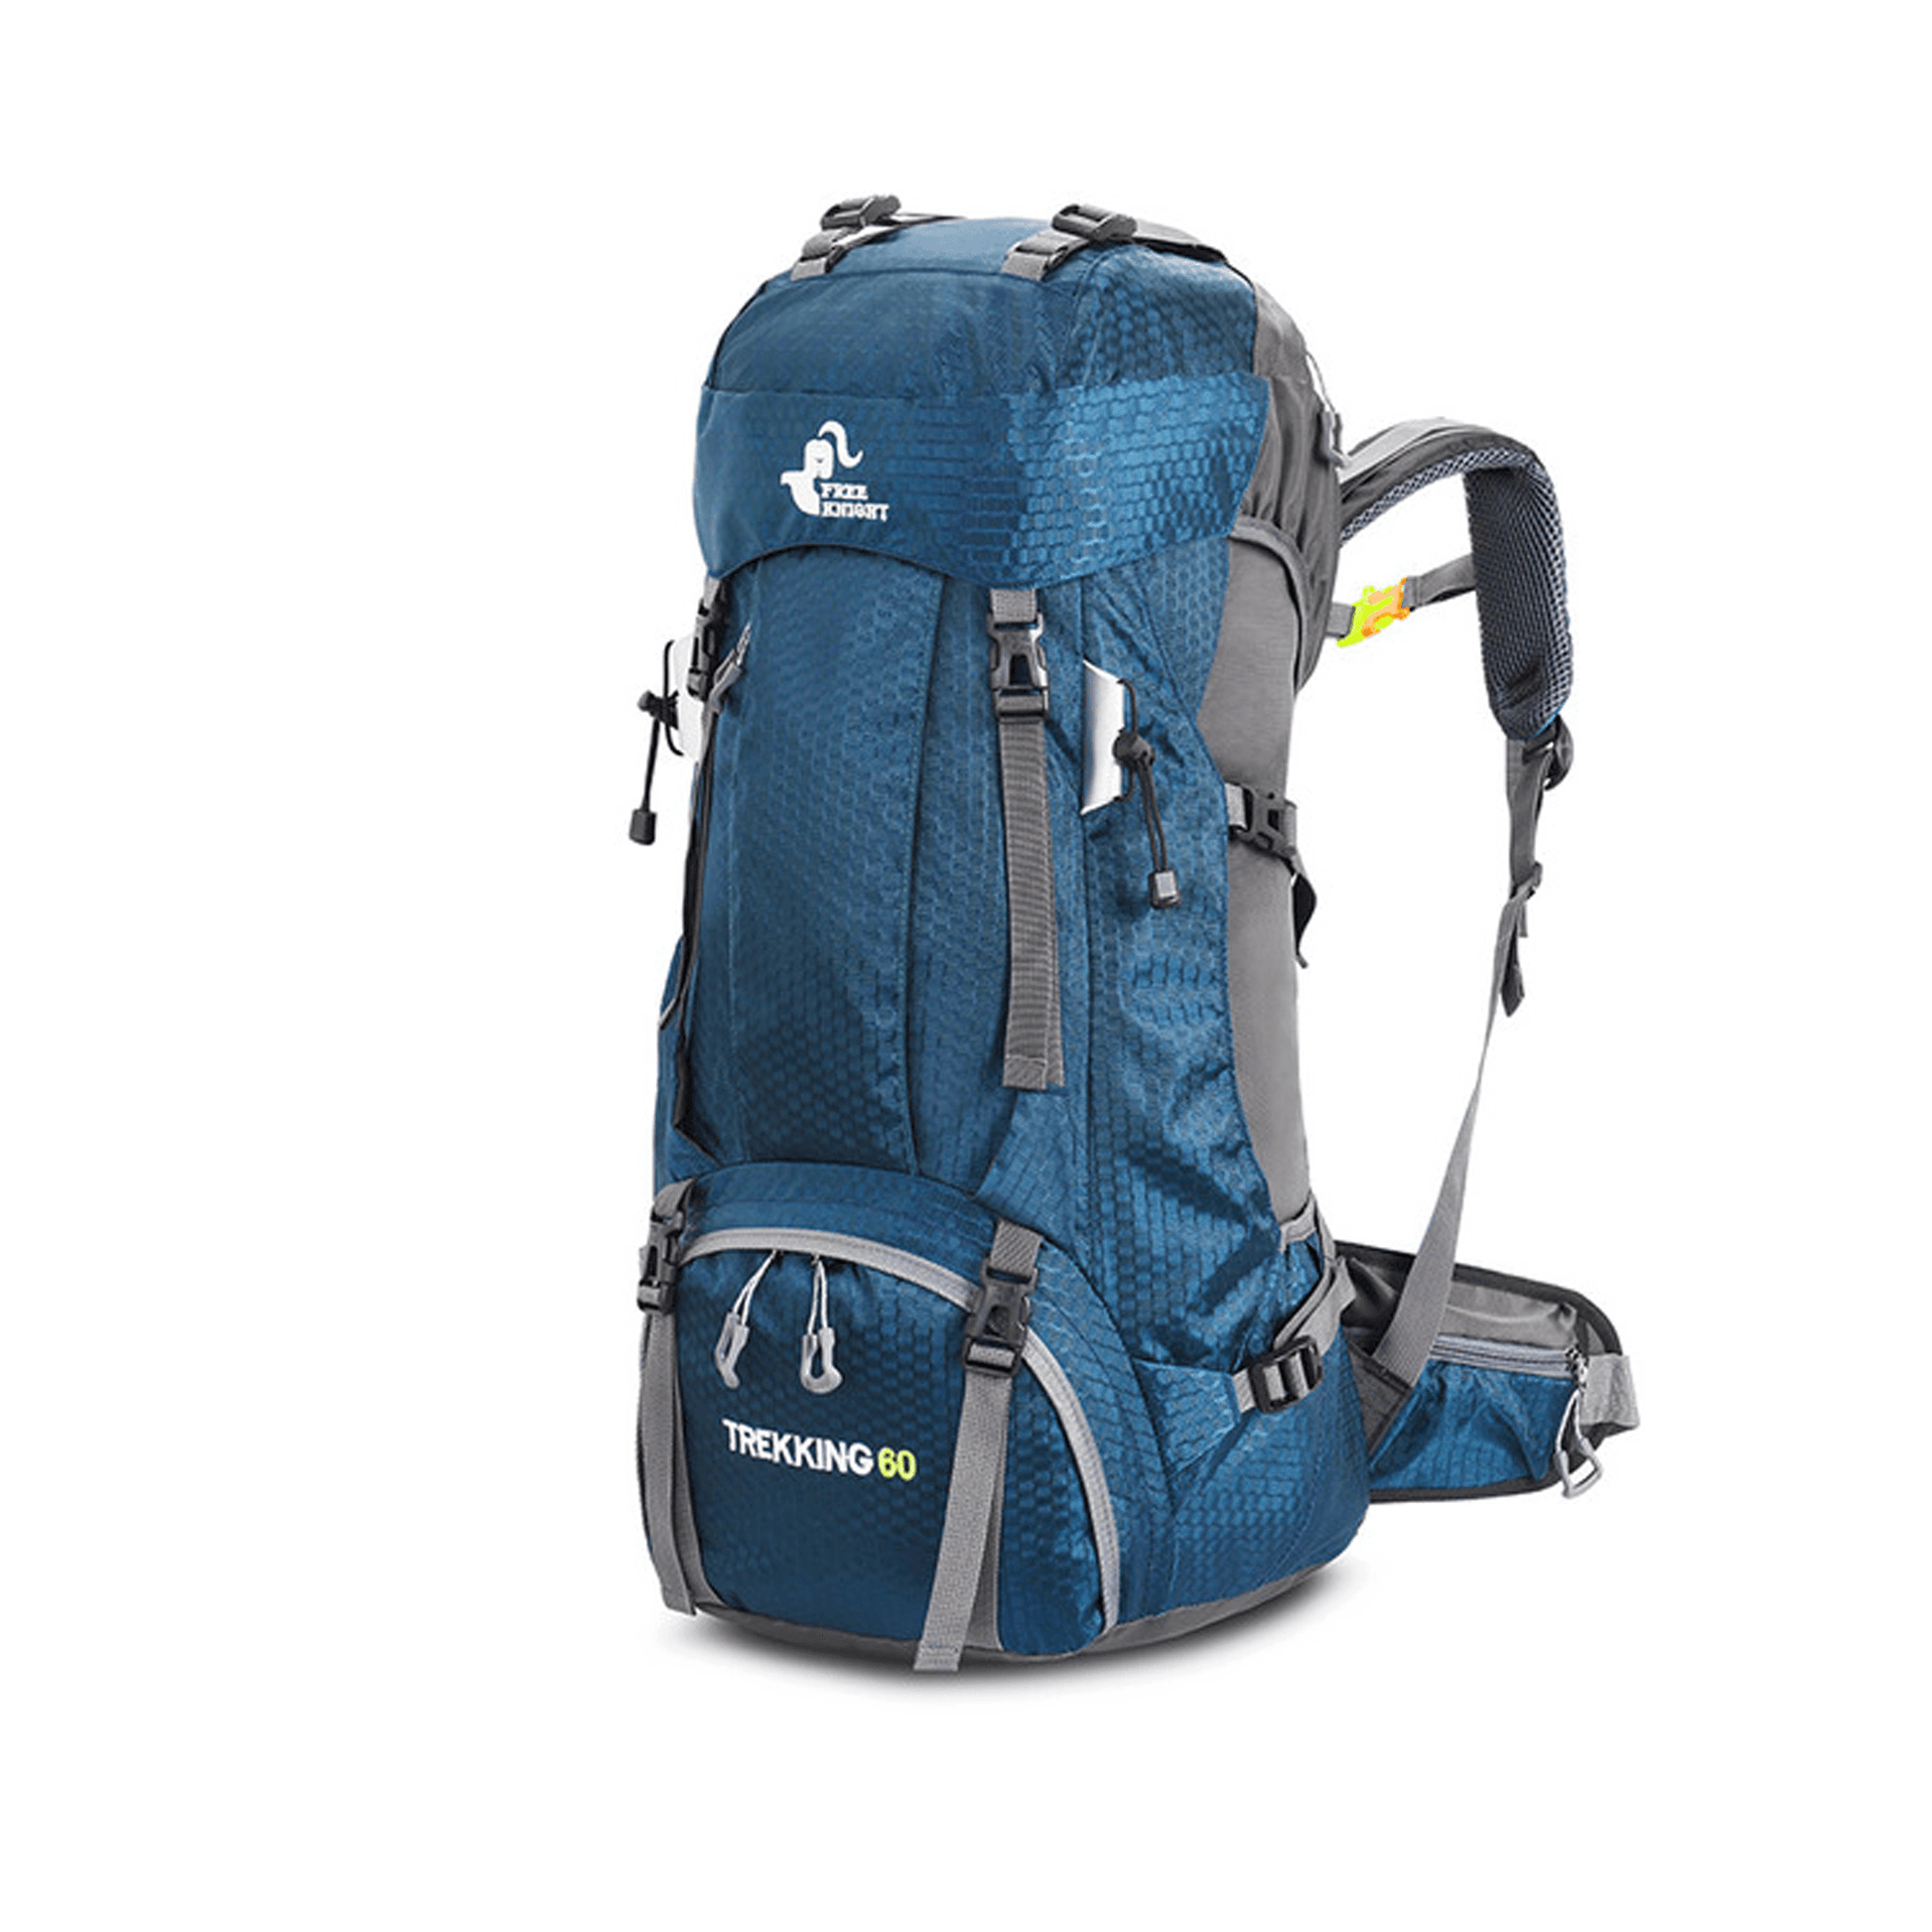 Outdoor Rucksack (60L) - San Michelle Bags suitcase nz